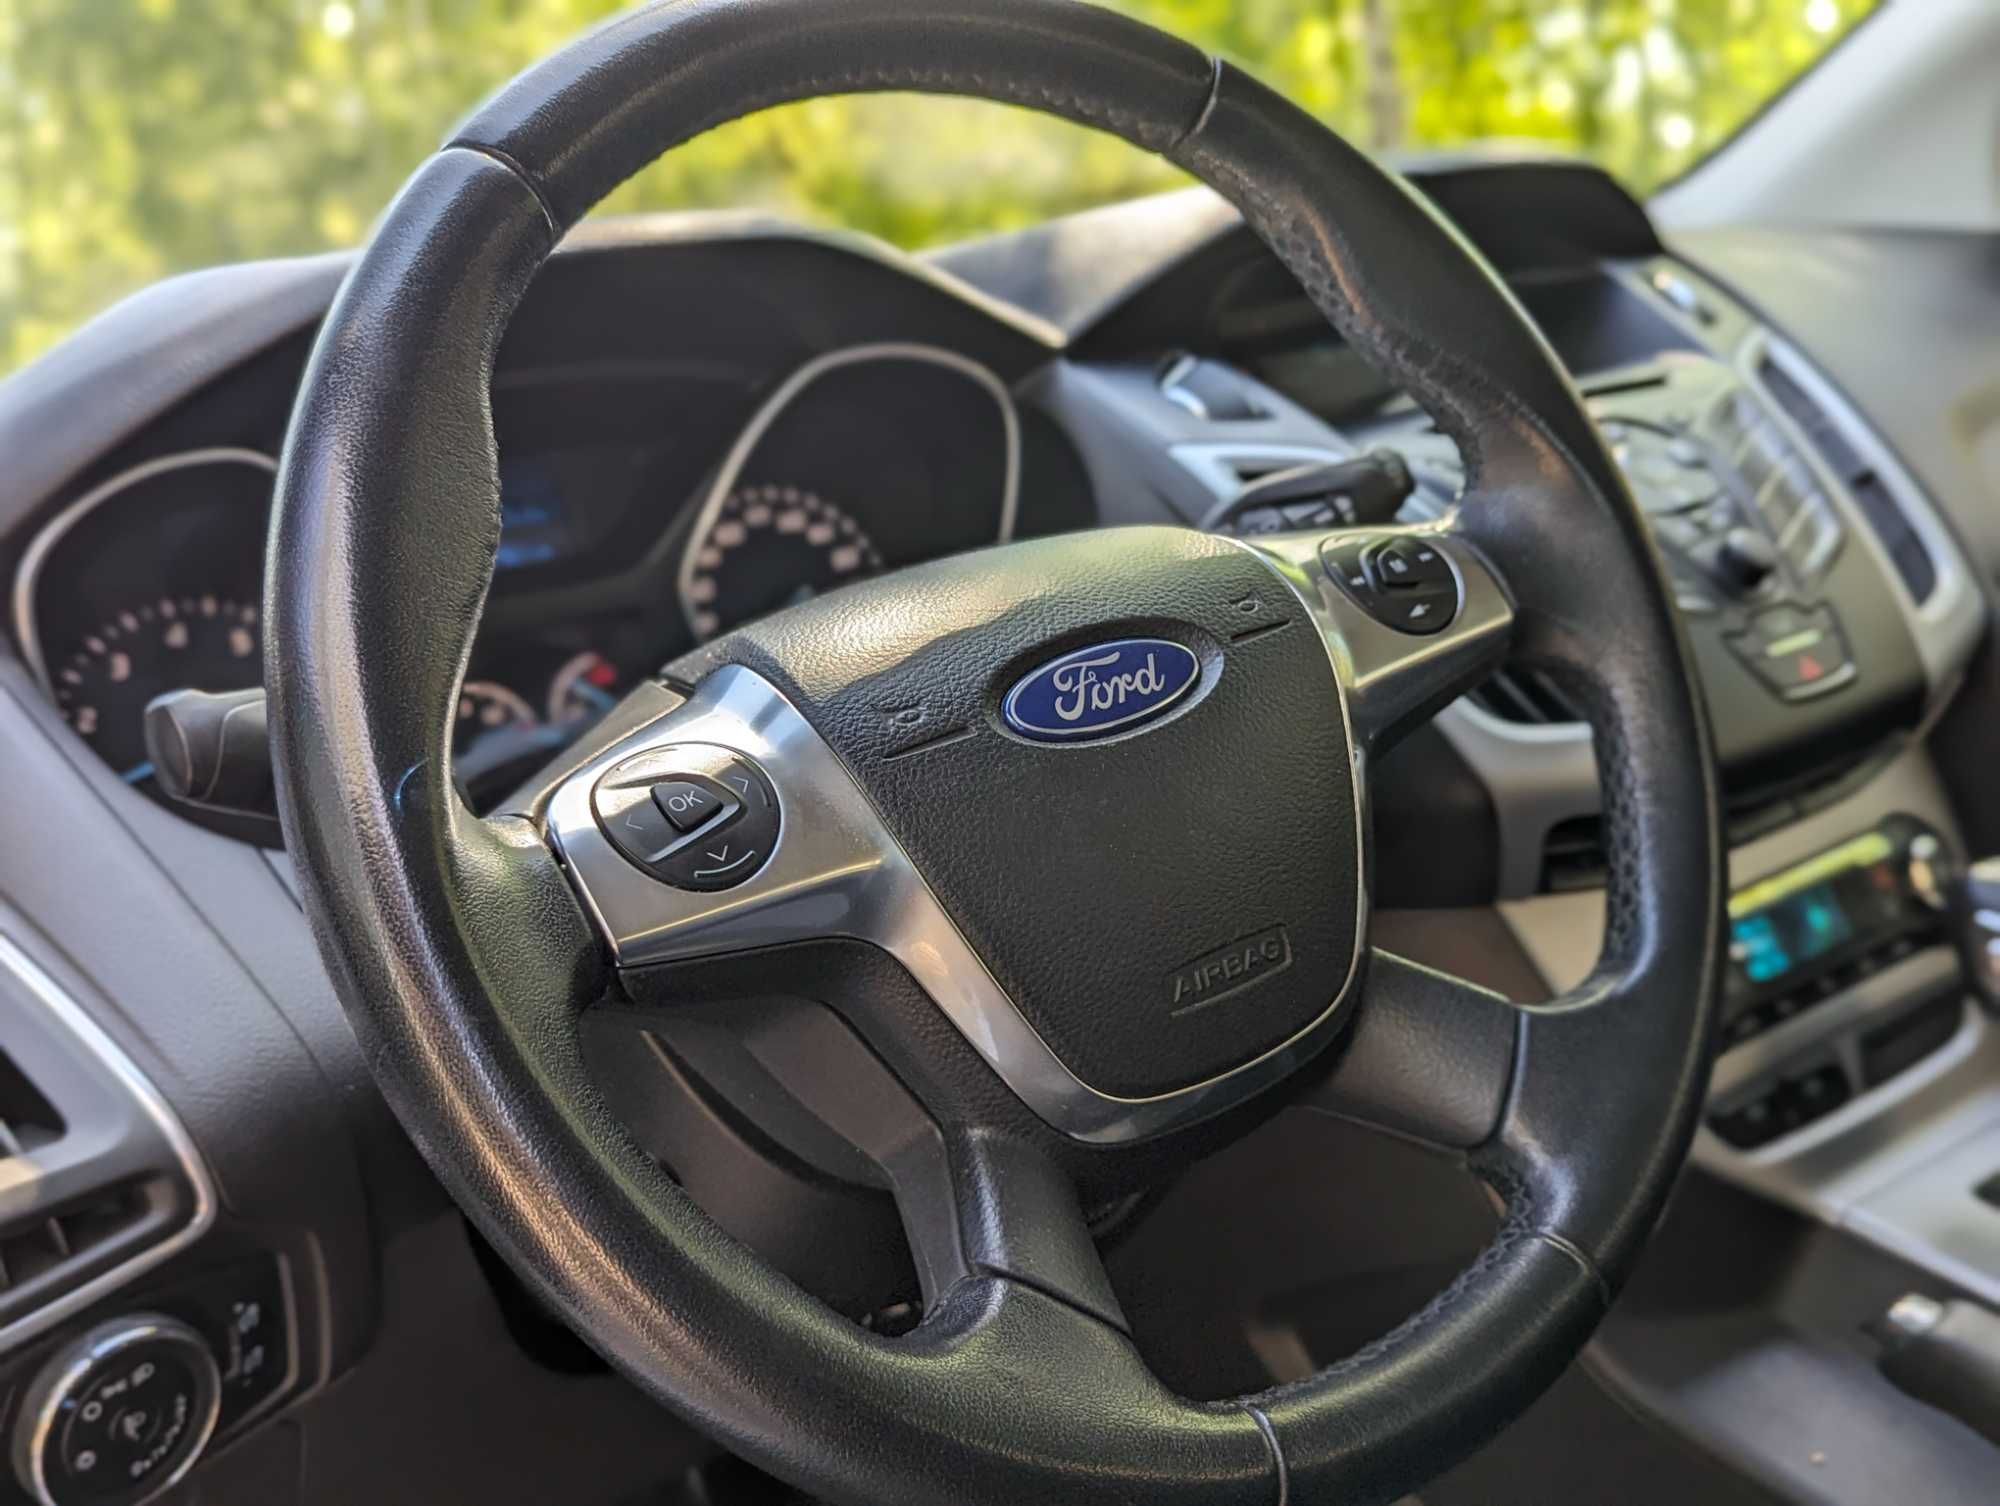 Ford Focus 2014 у кредит, розстрочку, на виплату.